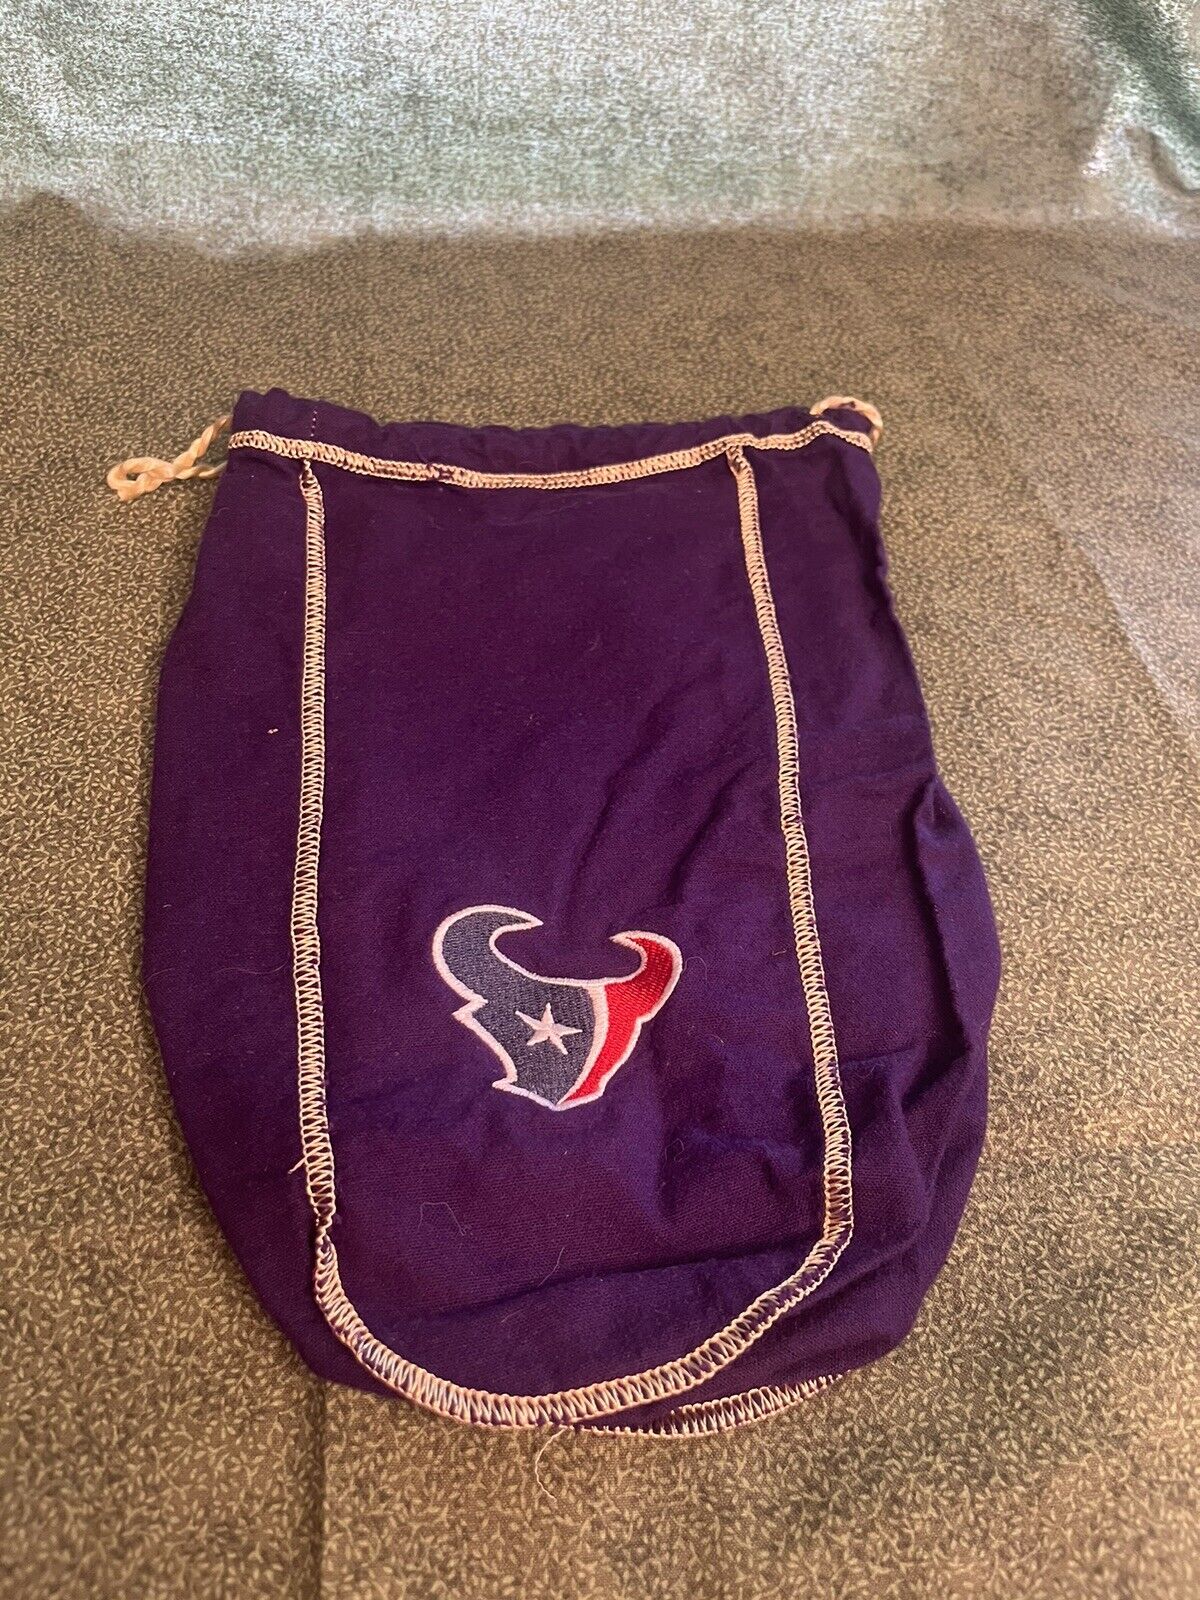 Crown Royal Houston Texans Promo Bag Swag Rare Large Size Purple